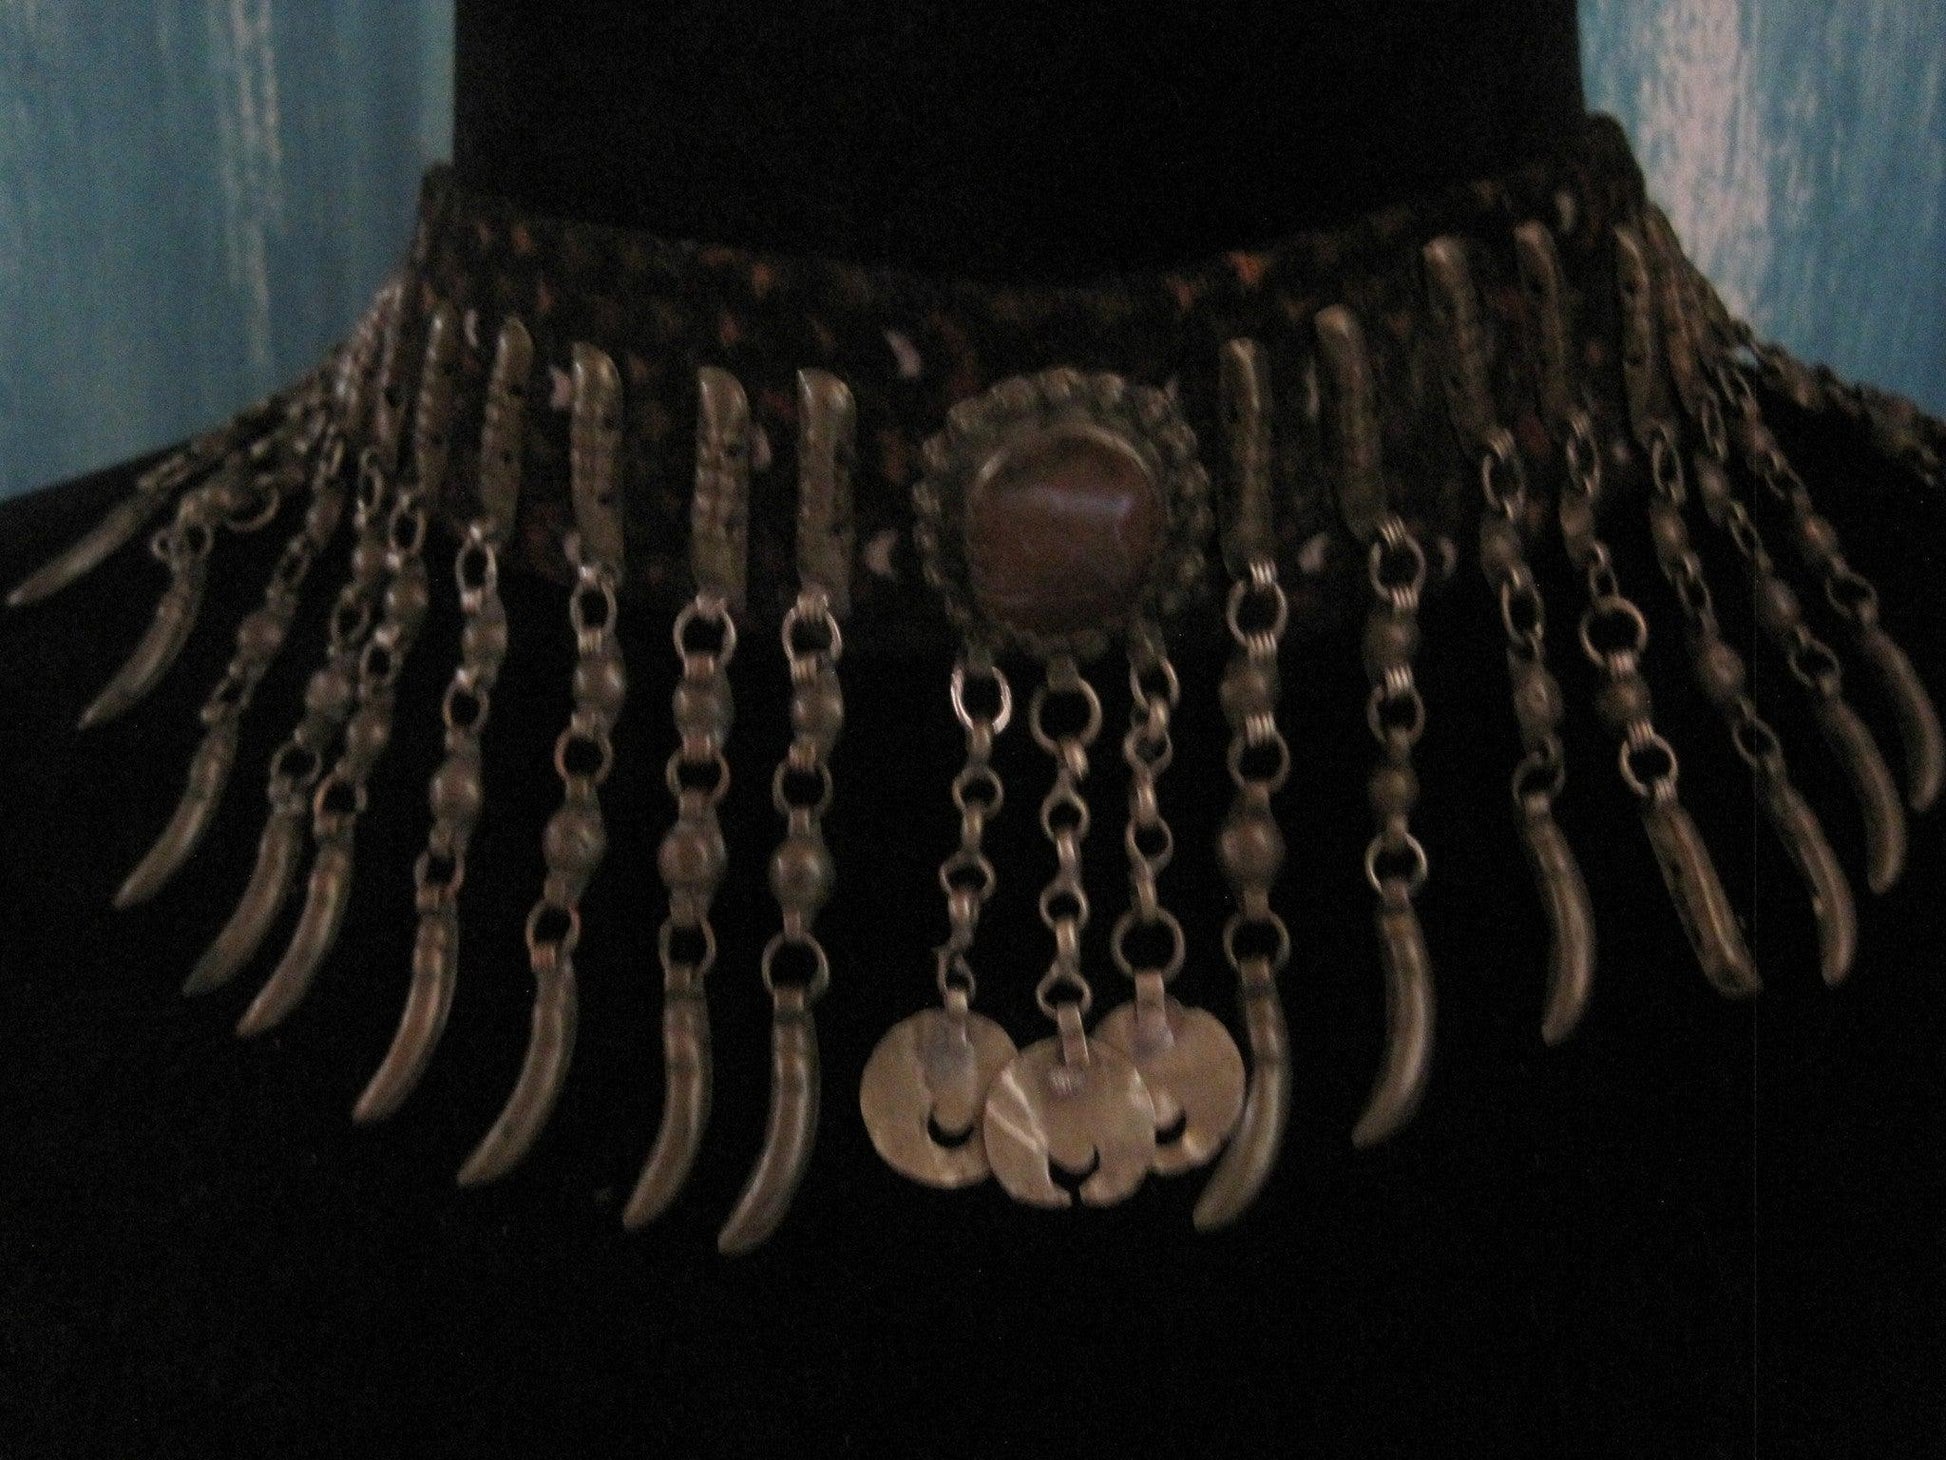 folk necklace from Ottoman era